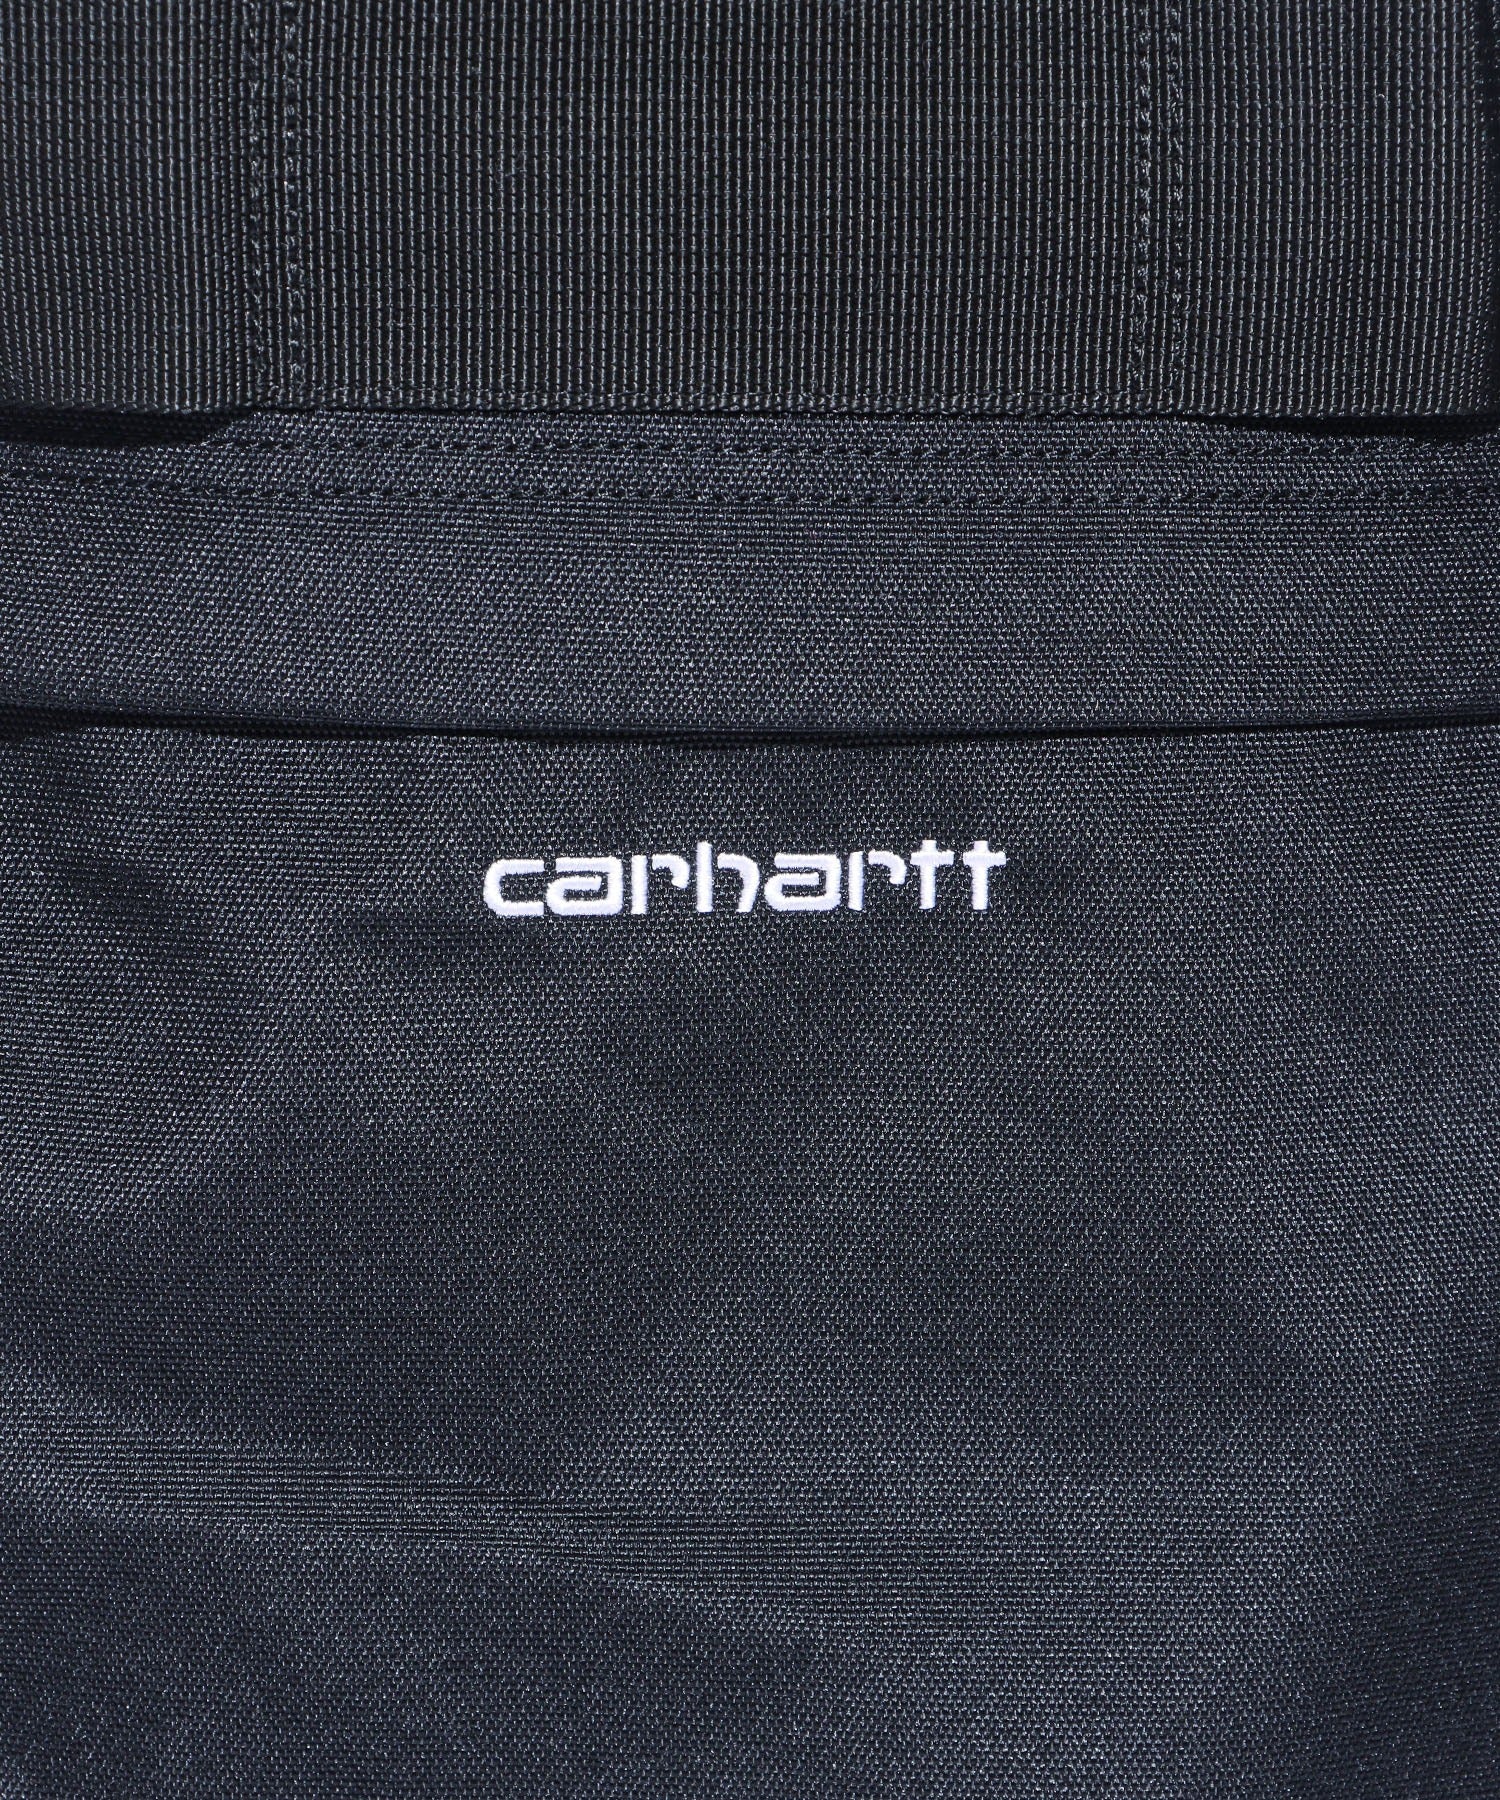 Carhartt WIP/カーハートダブリューアイピーPayton Carrier Backpack